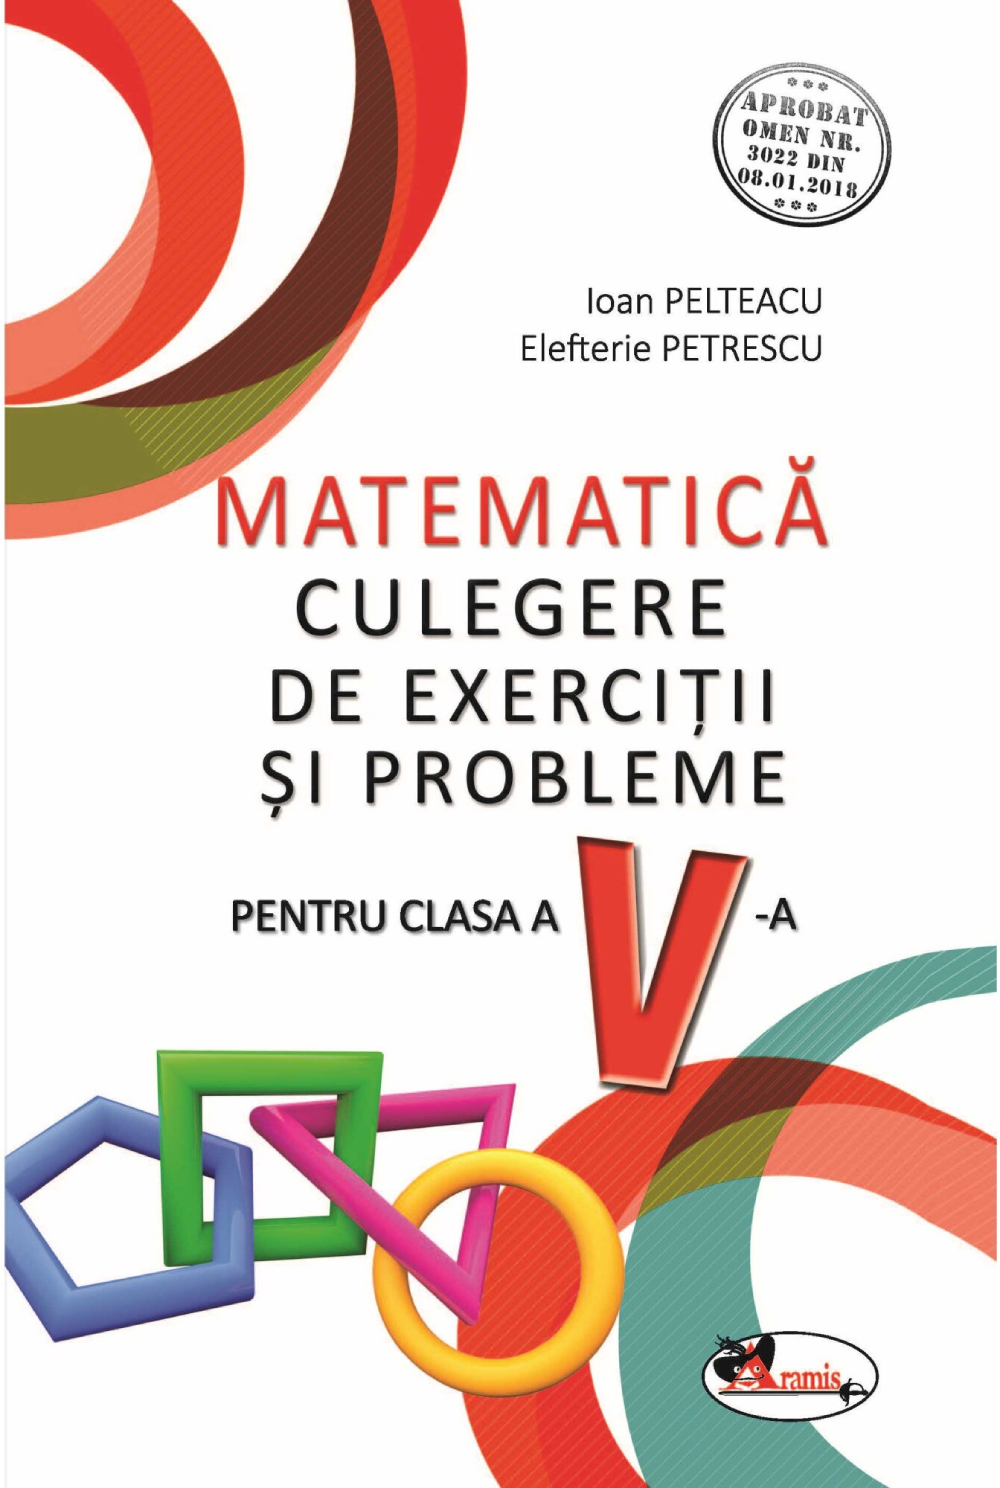 Matematica - Culegere de exercitii si probleme pentru cls a V-a | Ioan Pelteacu, Elefterie Petrescu